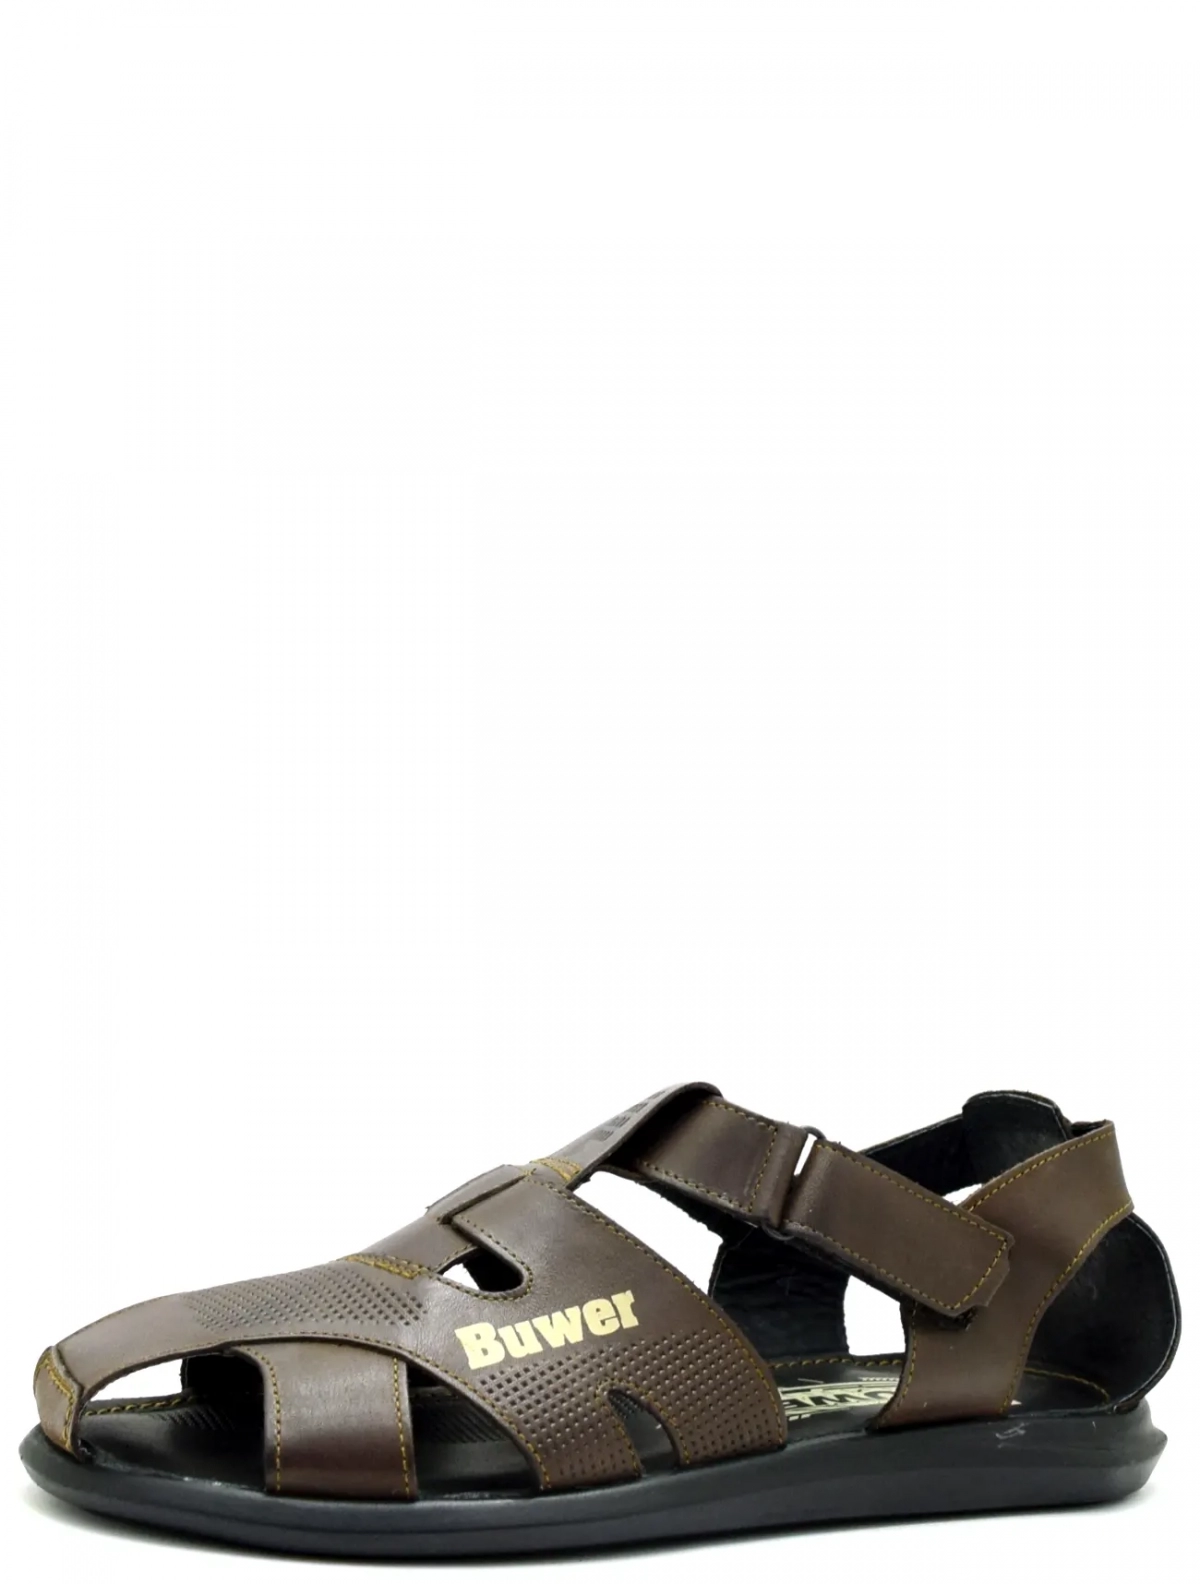 Buwer 21D5686L/49 мужские сандали